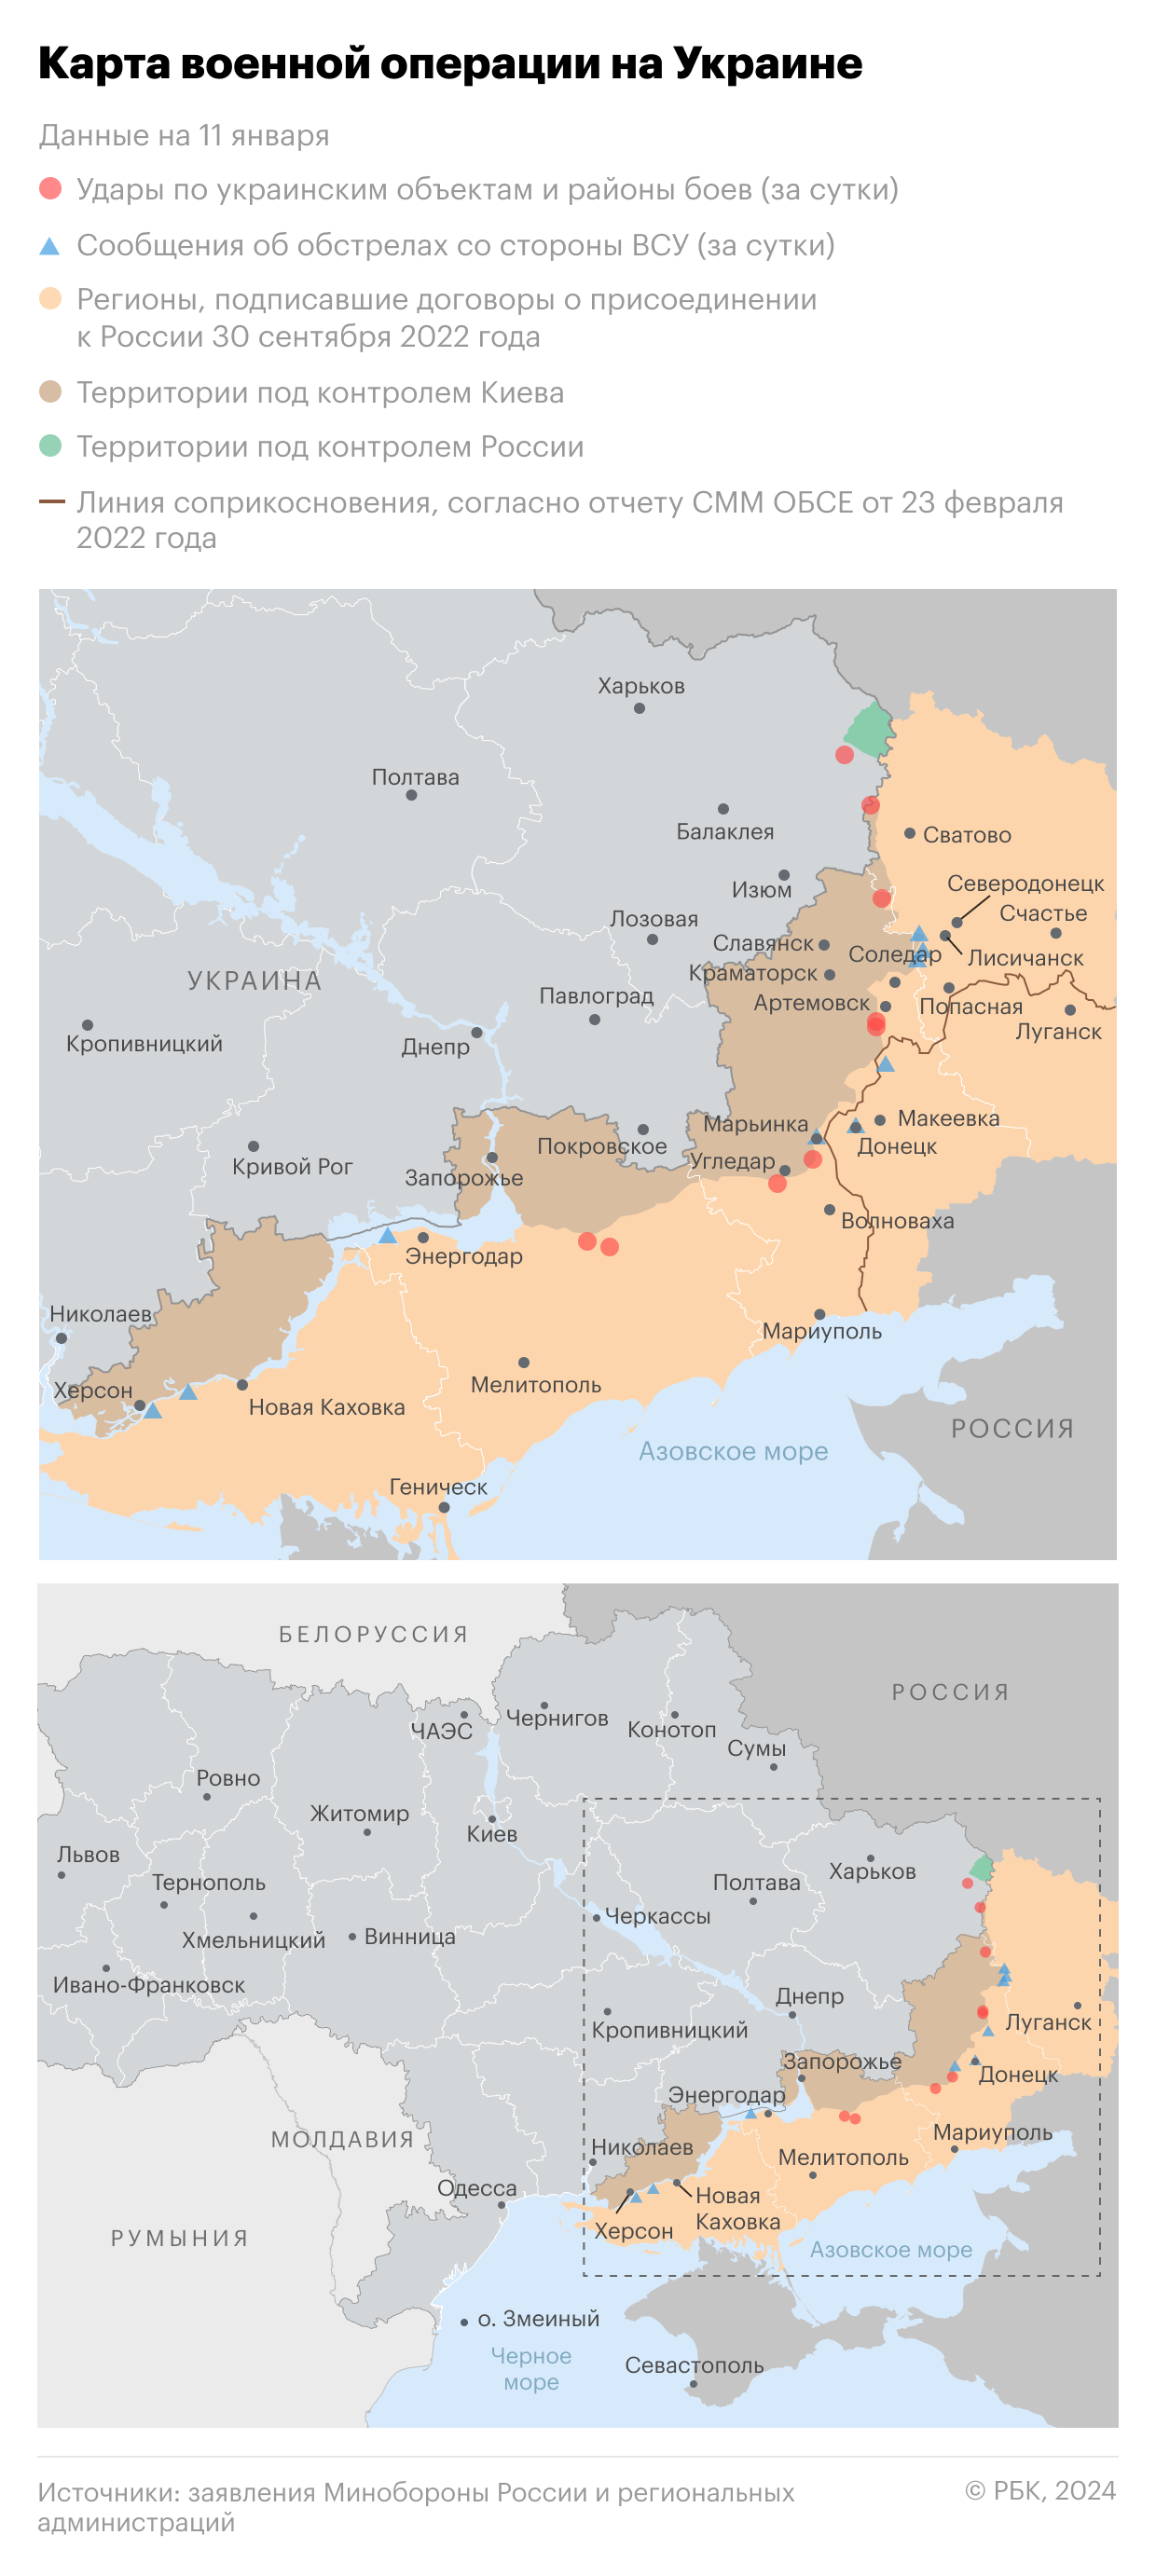 Военная операция на Украине. Карта на 11 января